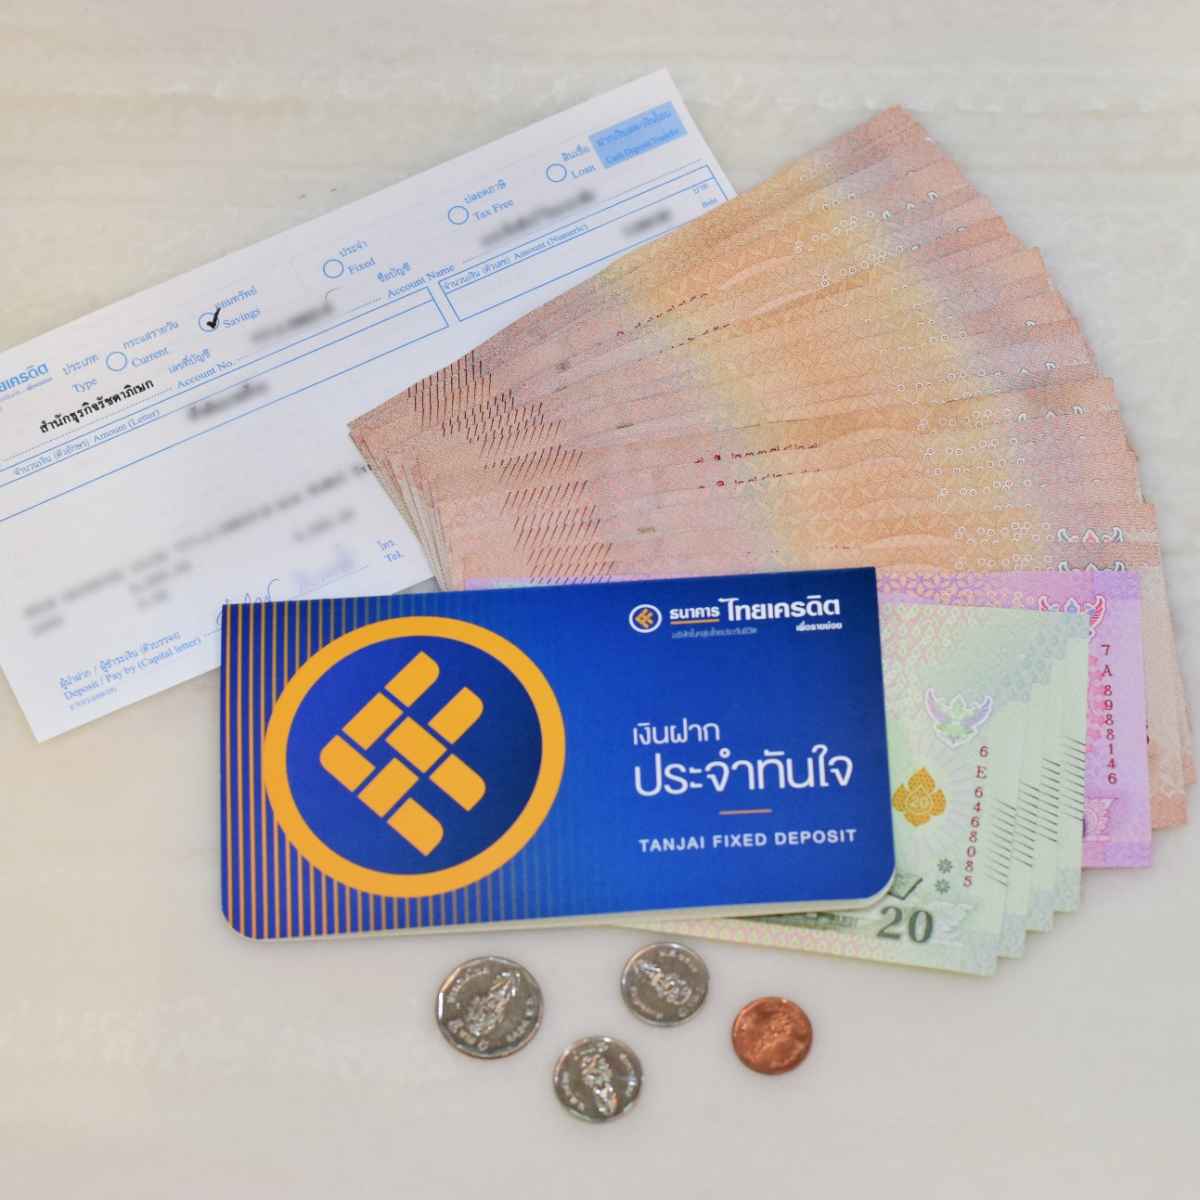 Thai Credit Ratail Bank